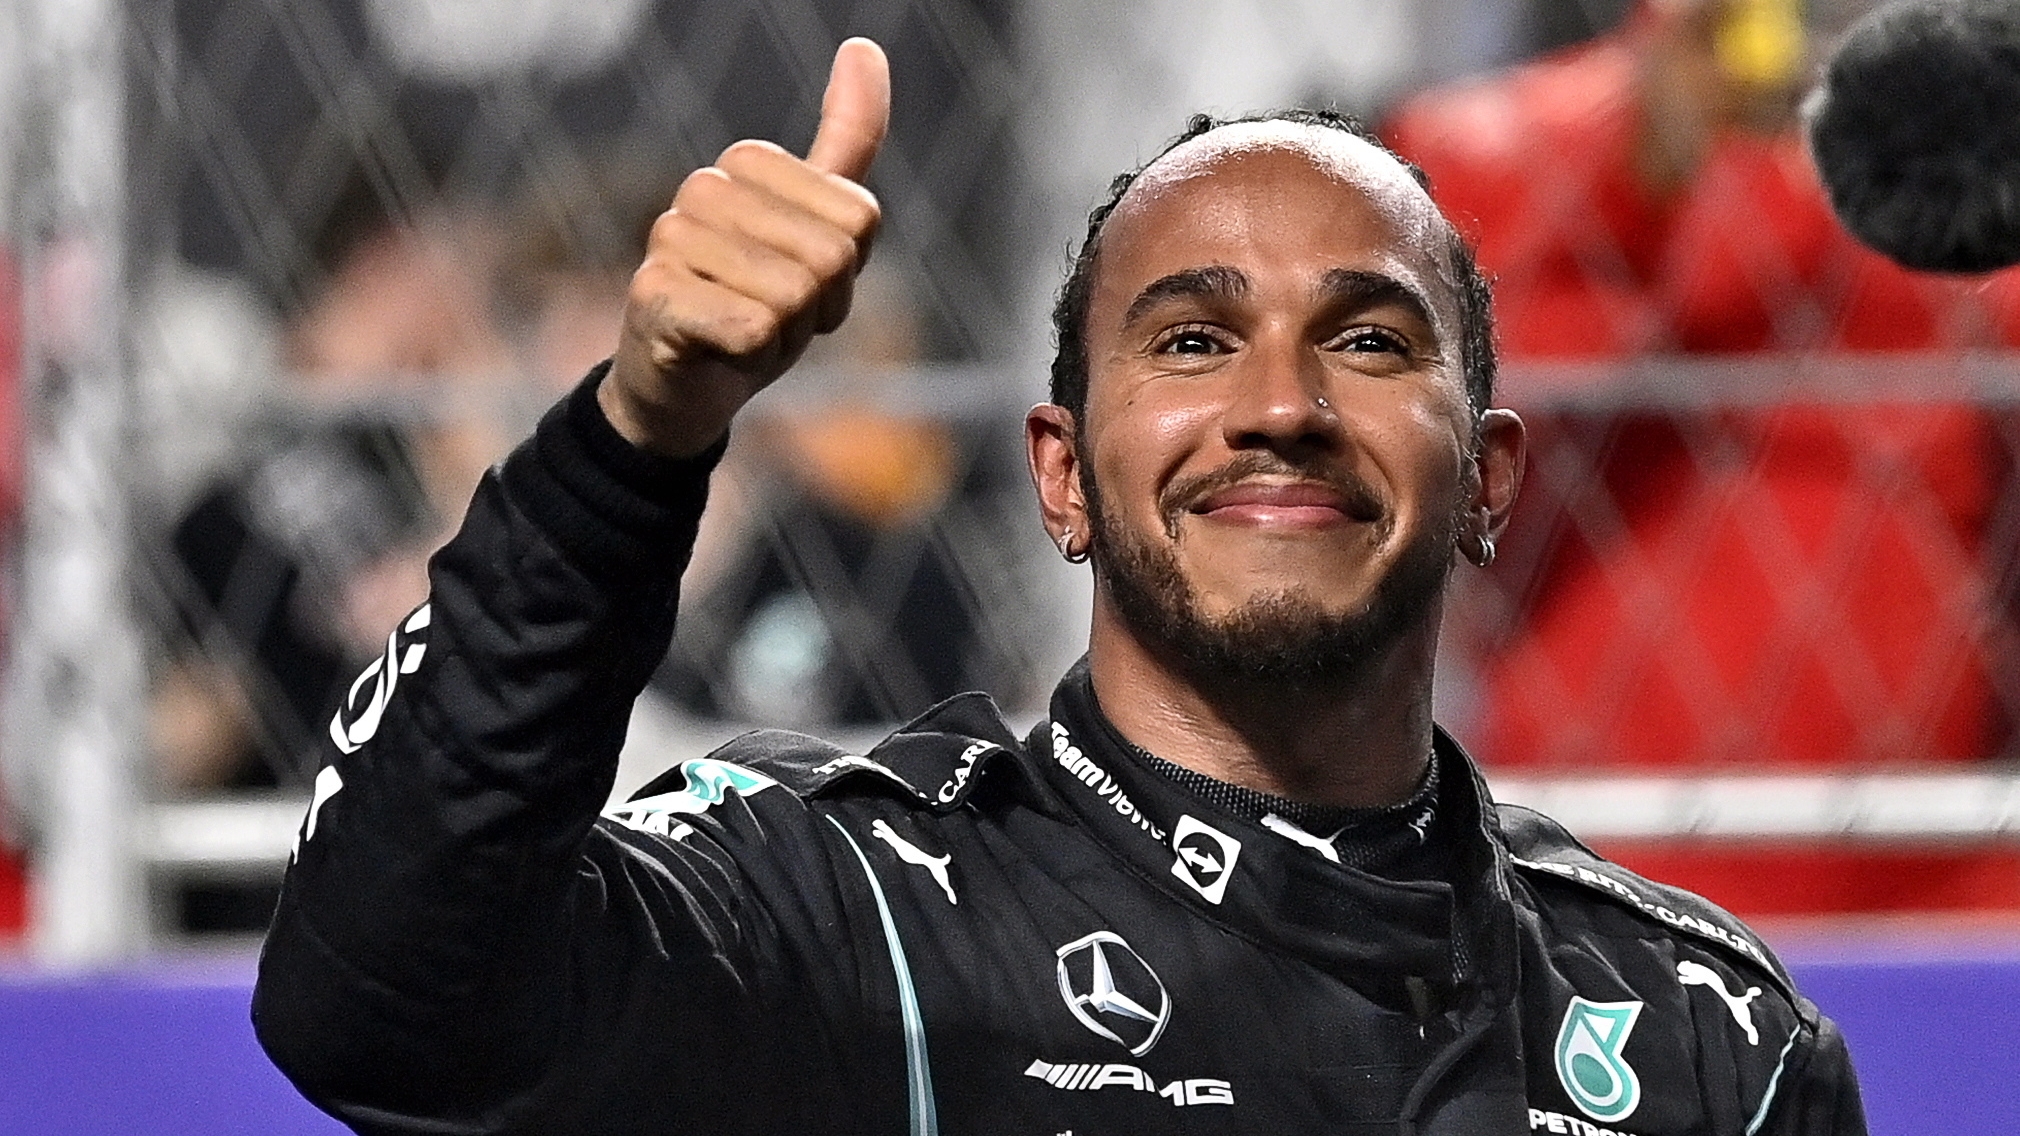 Lewis Hamilton se negó a despojarse de sus joyas para competir en la Fórmula 1 (Foto: EFE)
